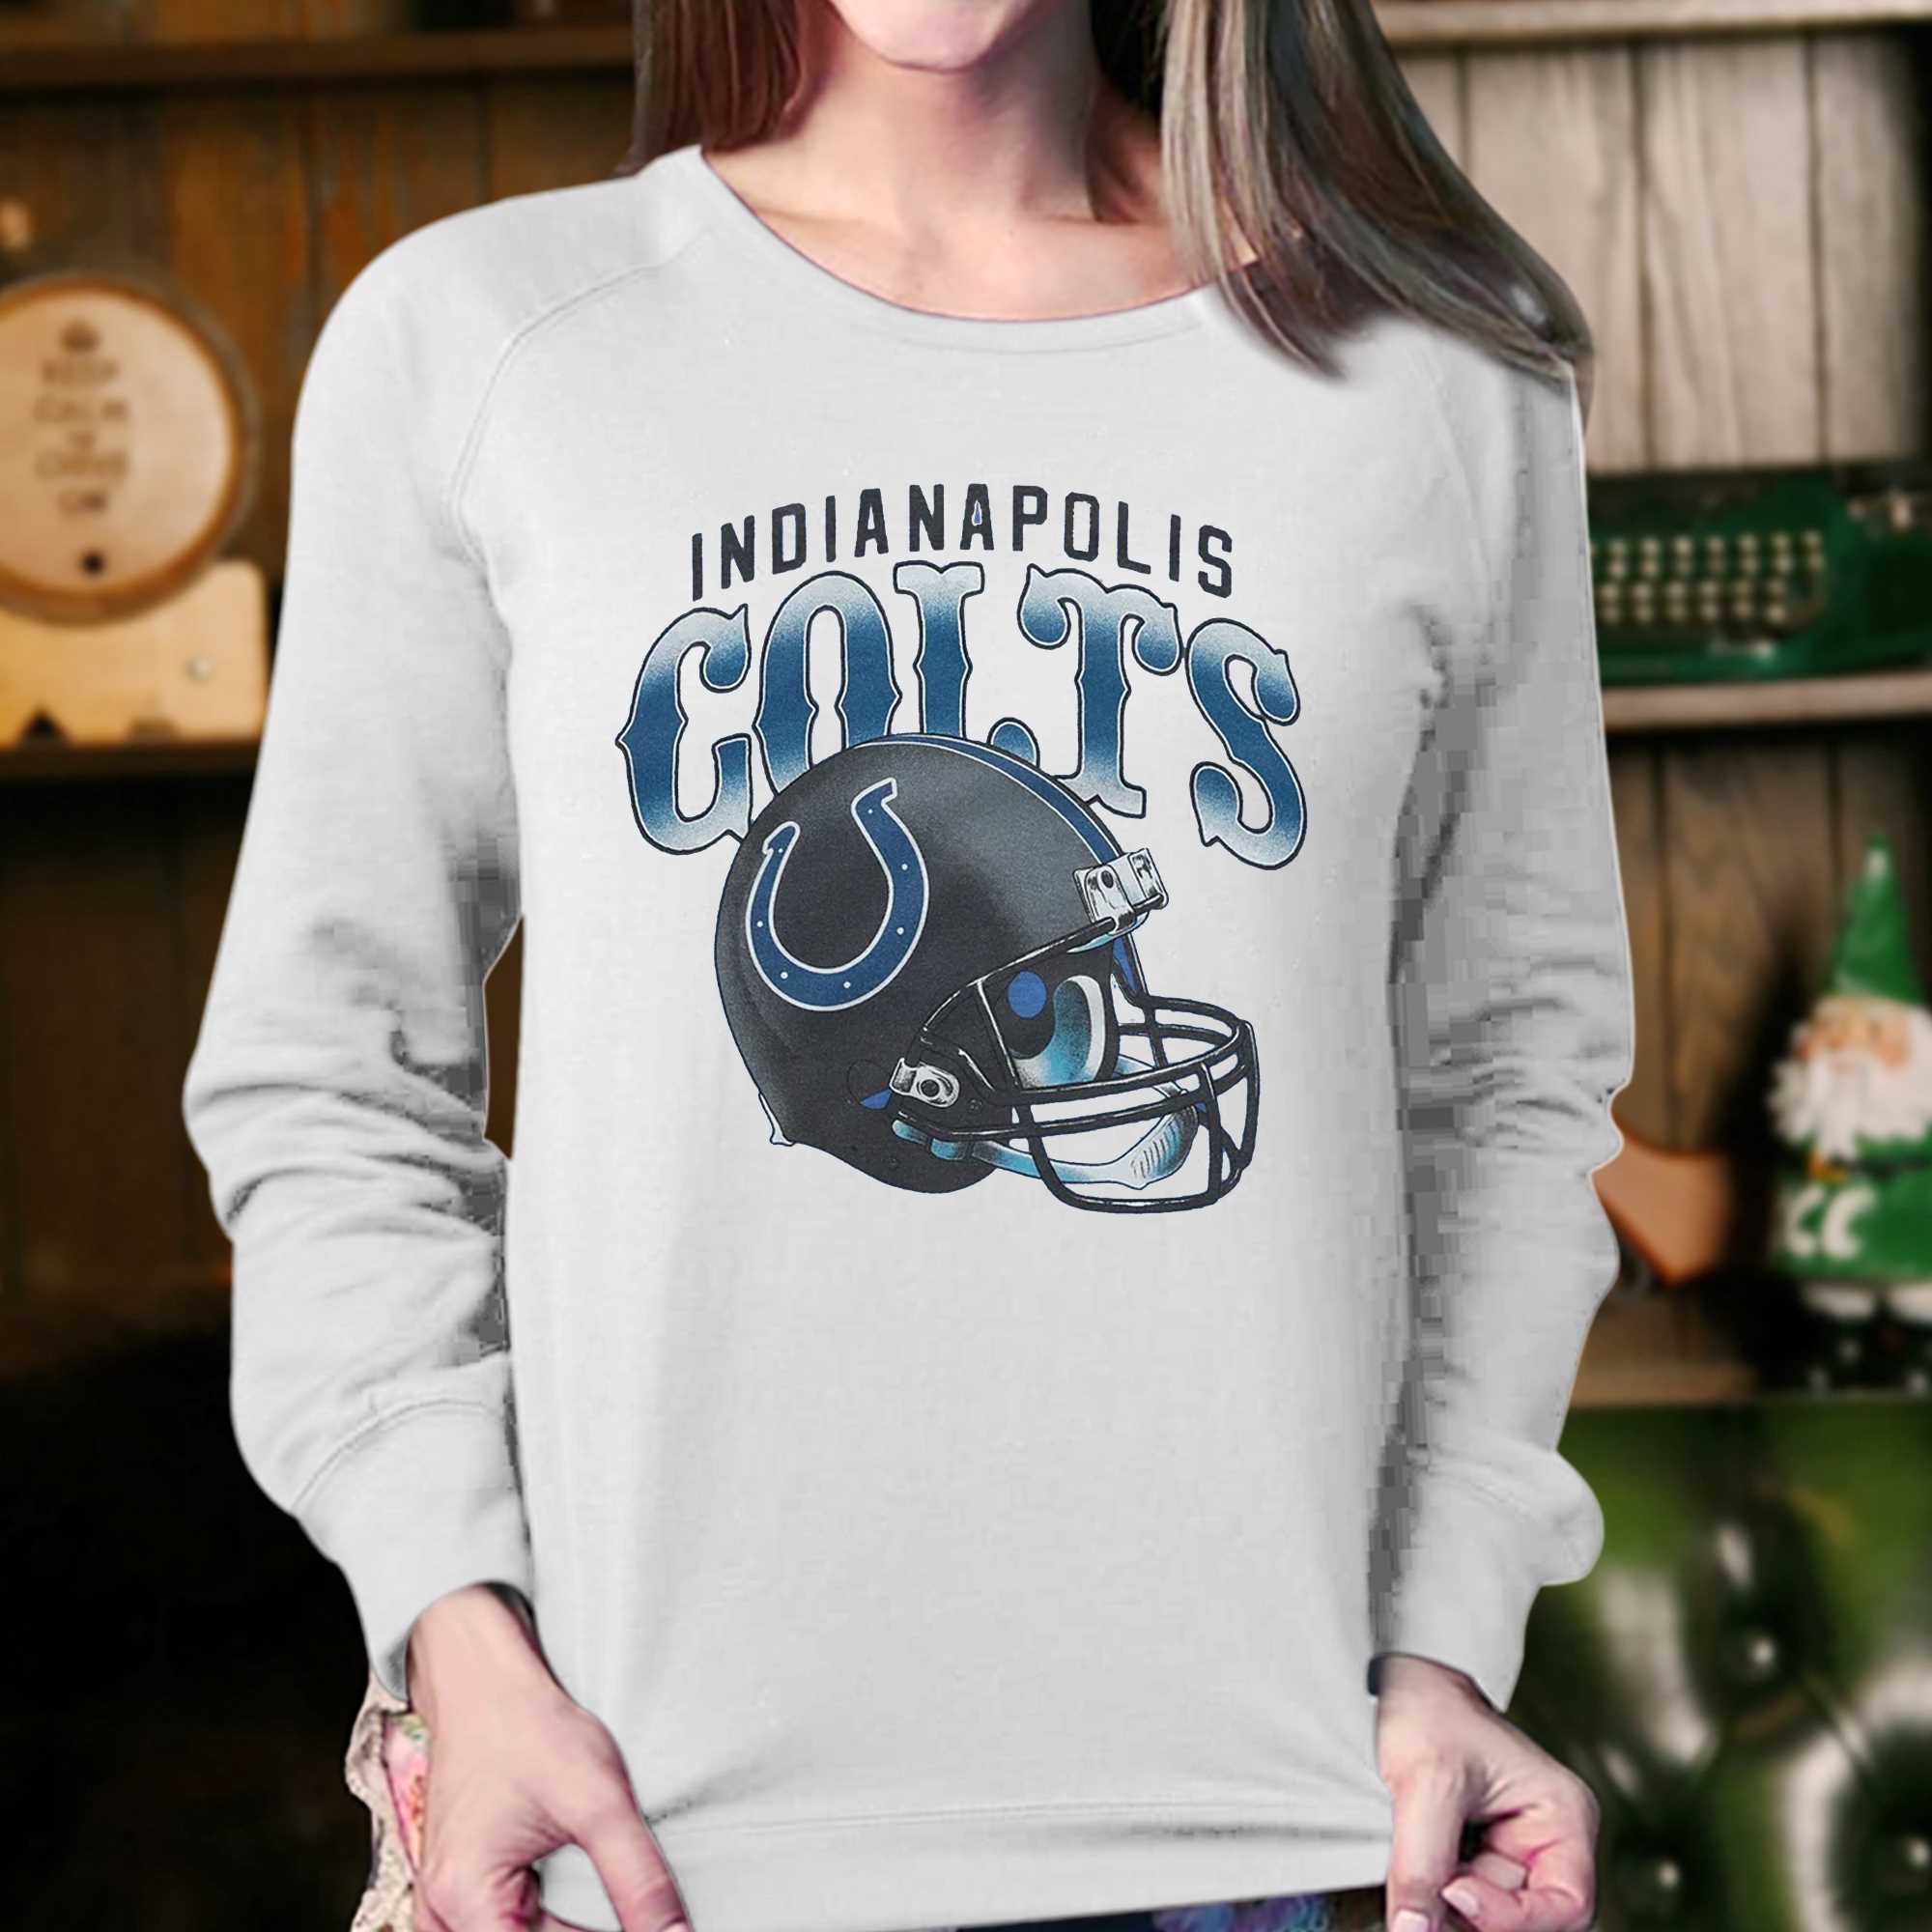 Indianapolis Colts Jerseys, Apparel & Gear.